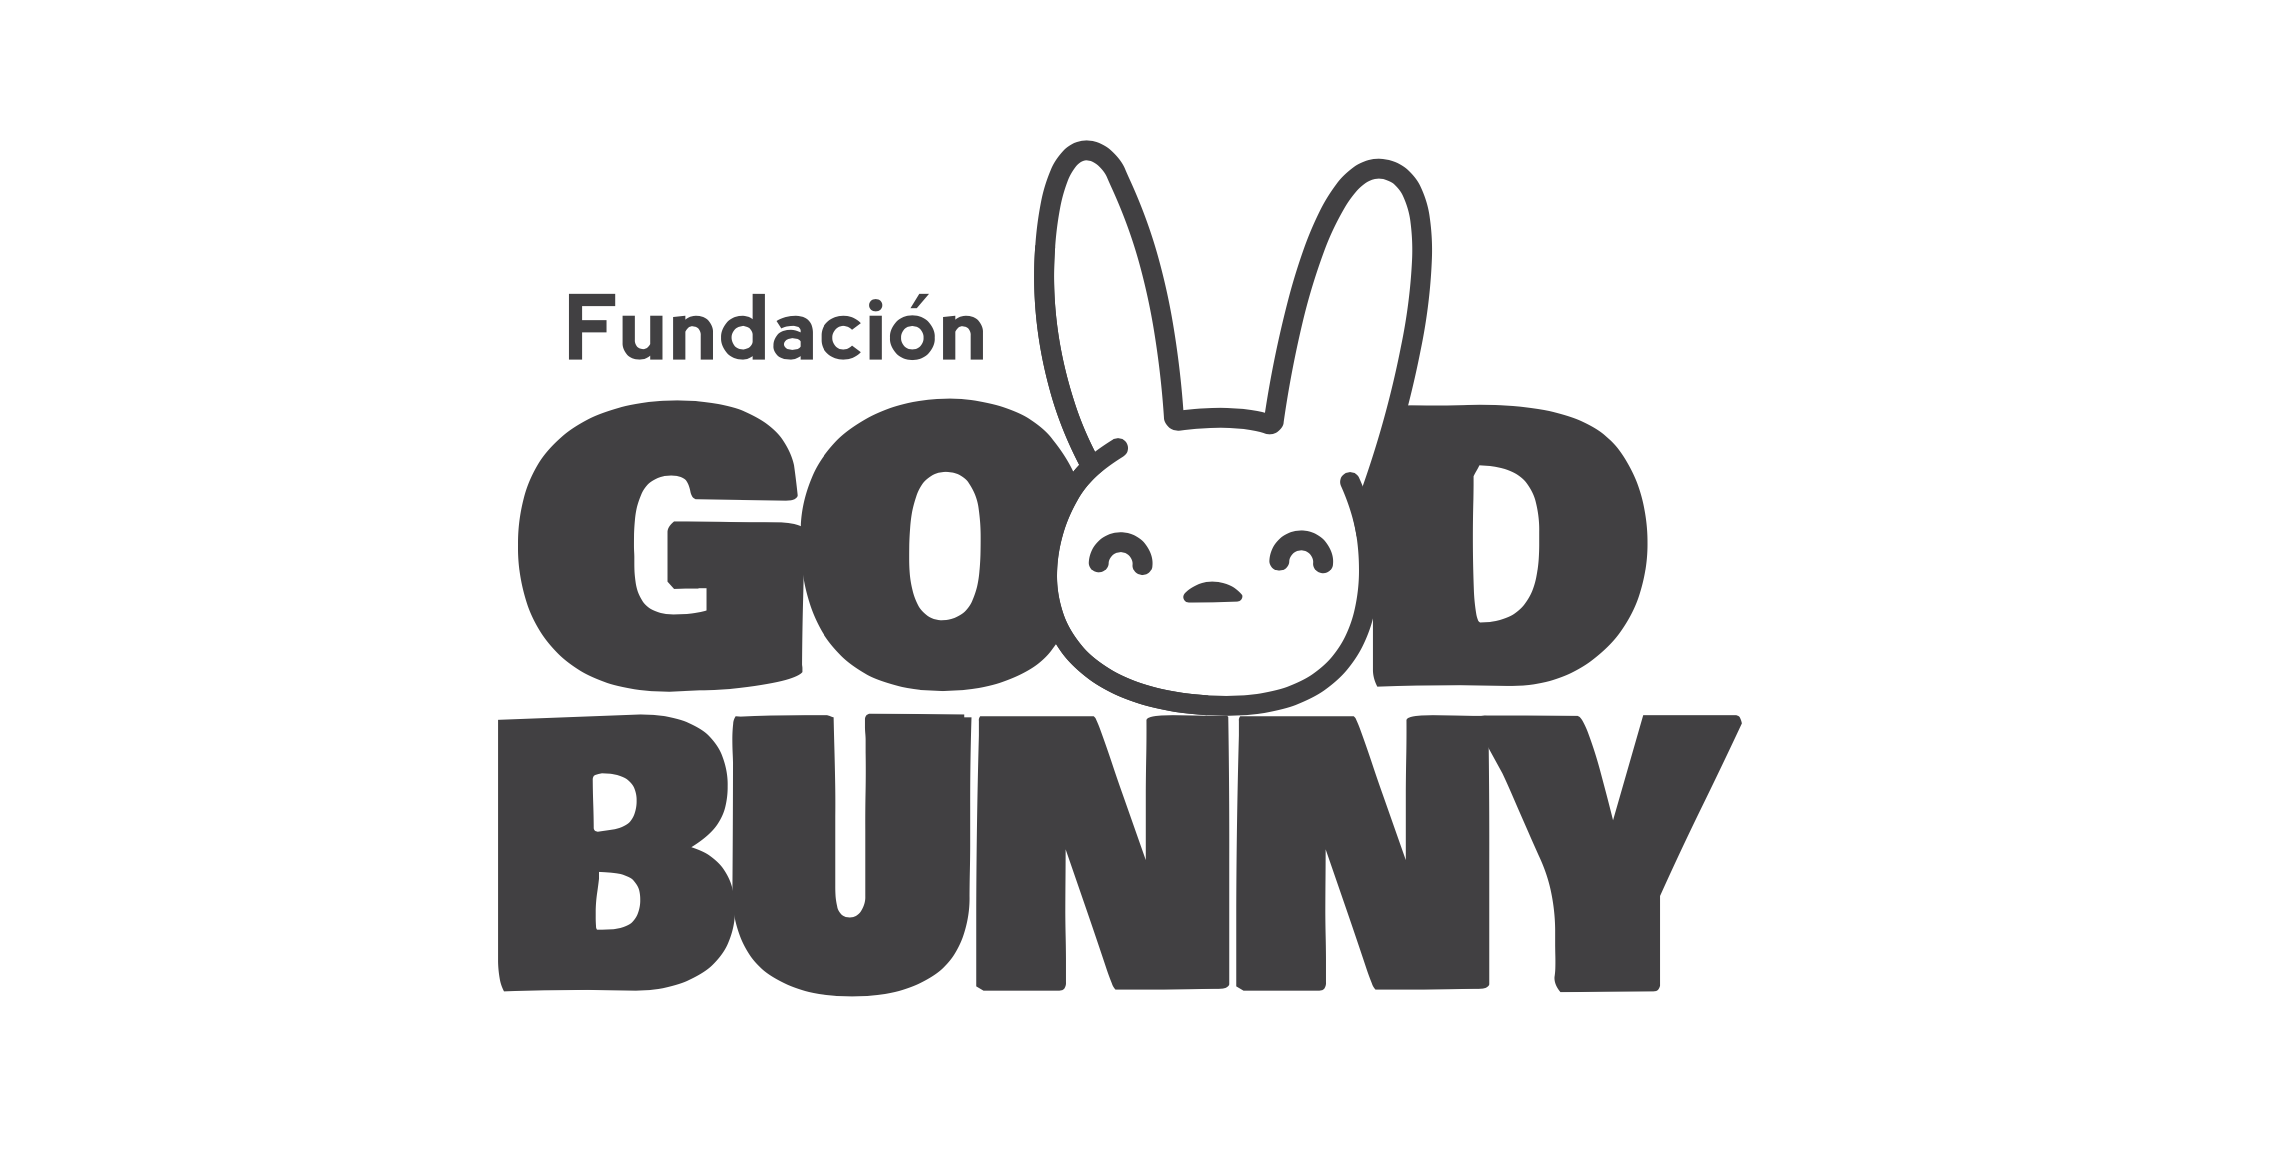 Good Bunny Foundation